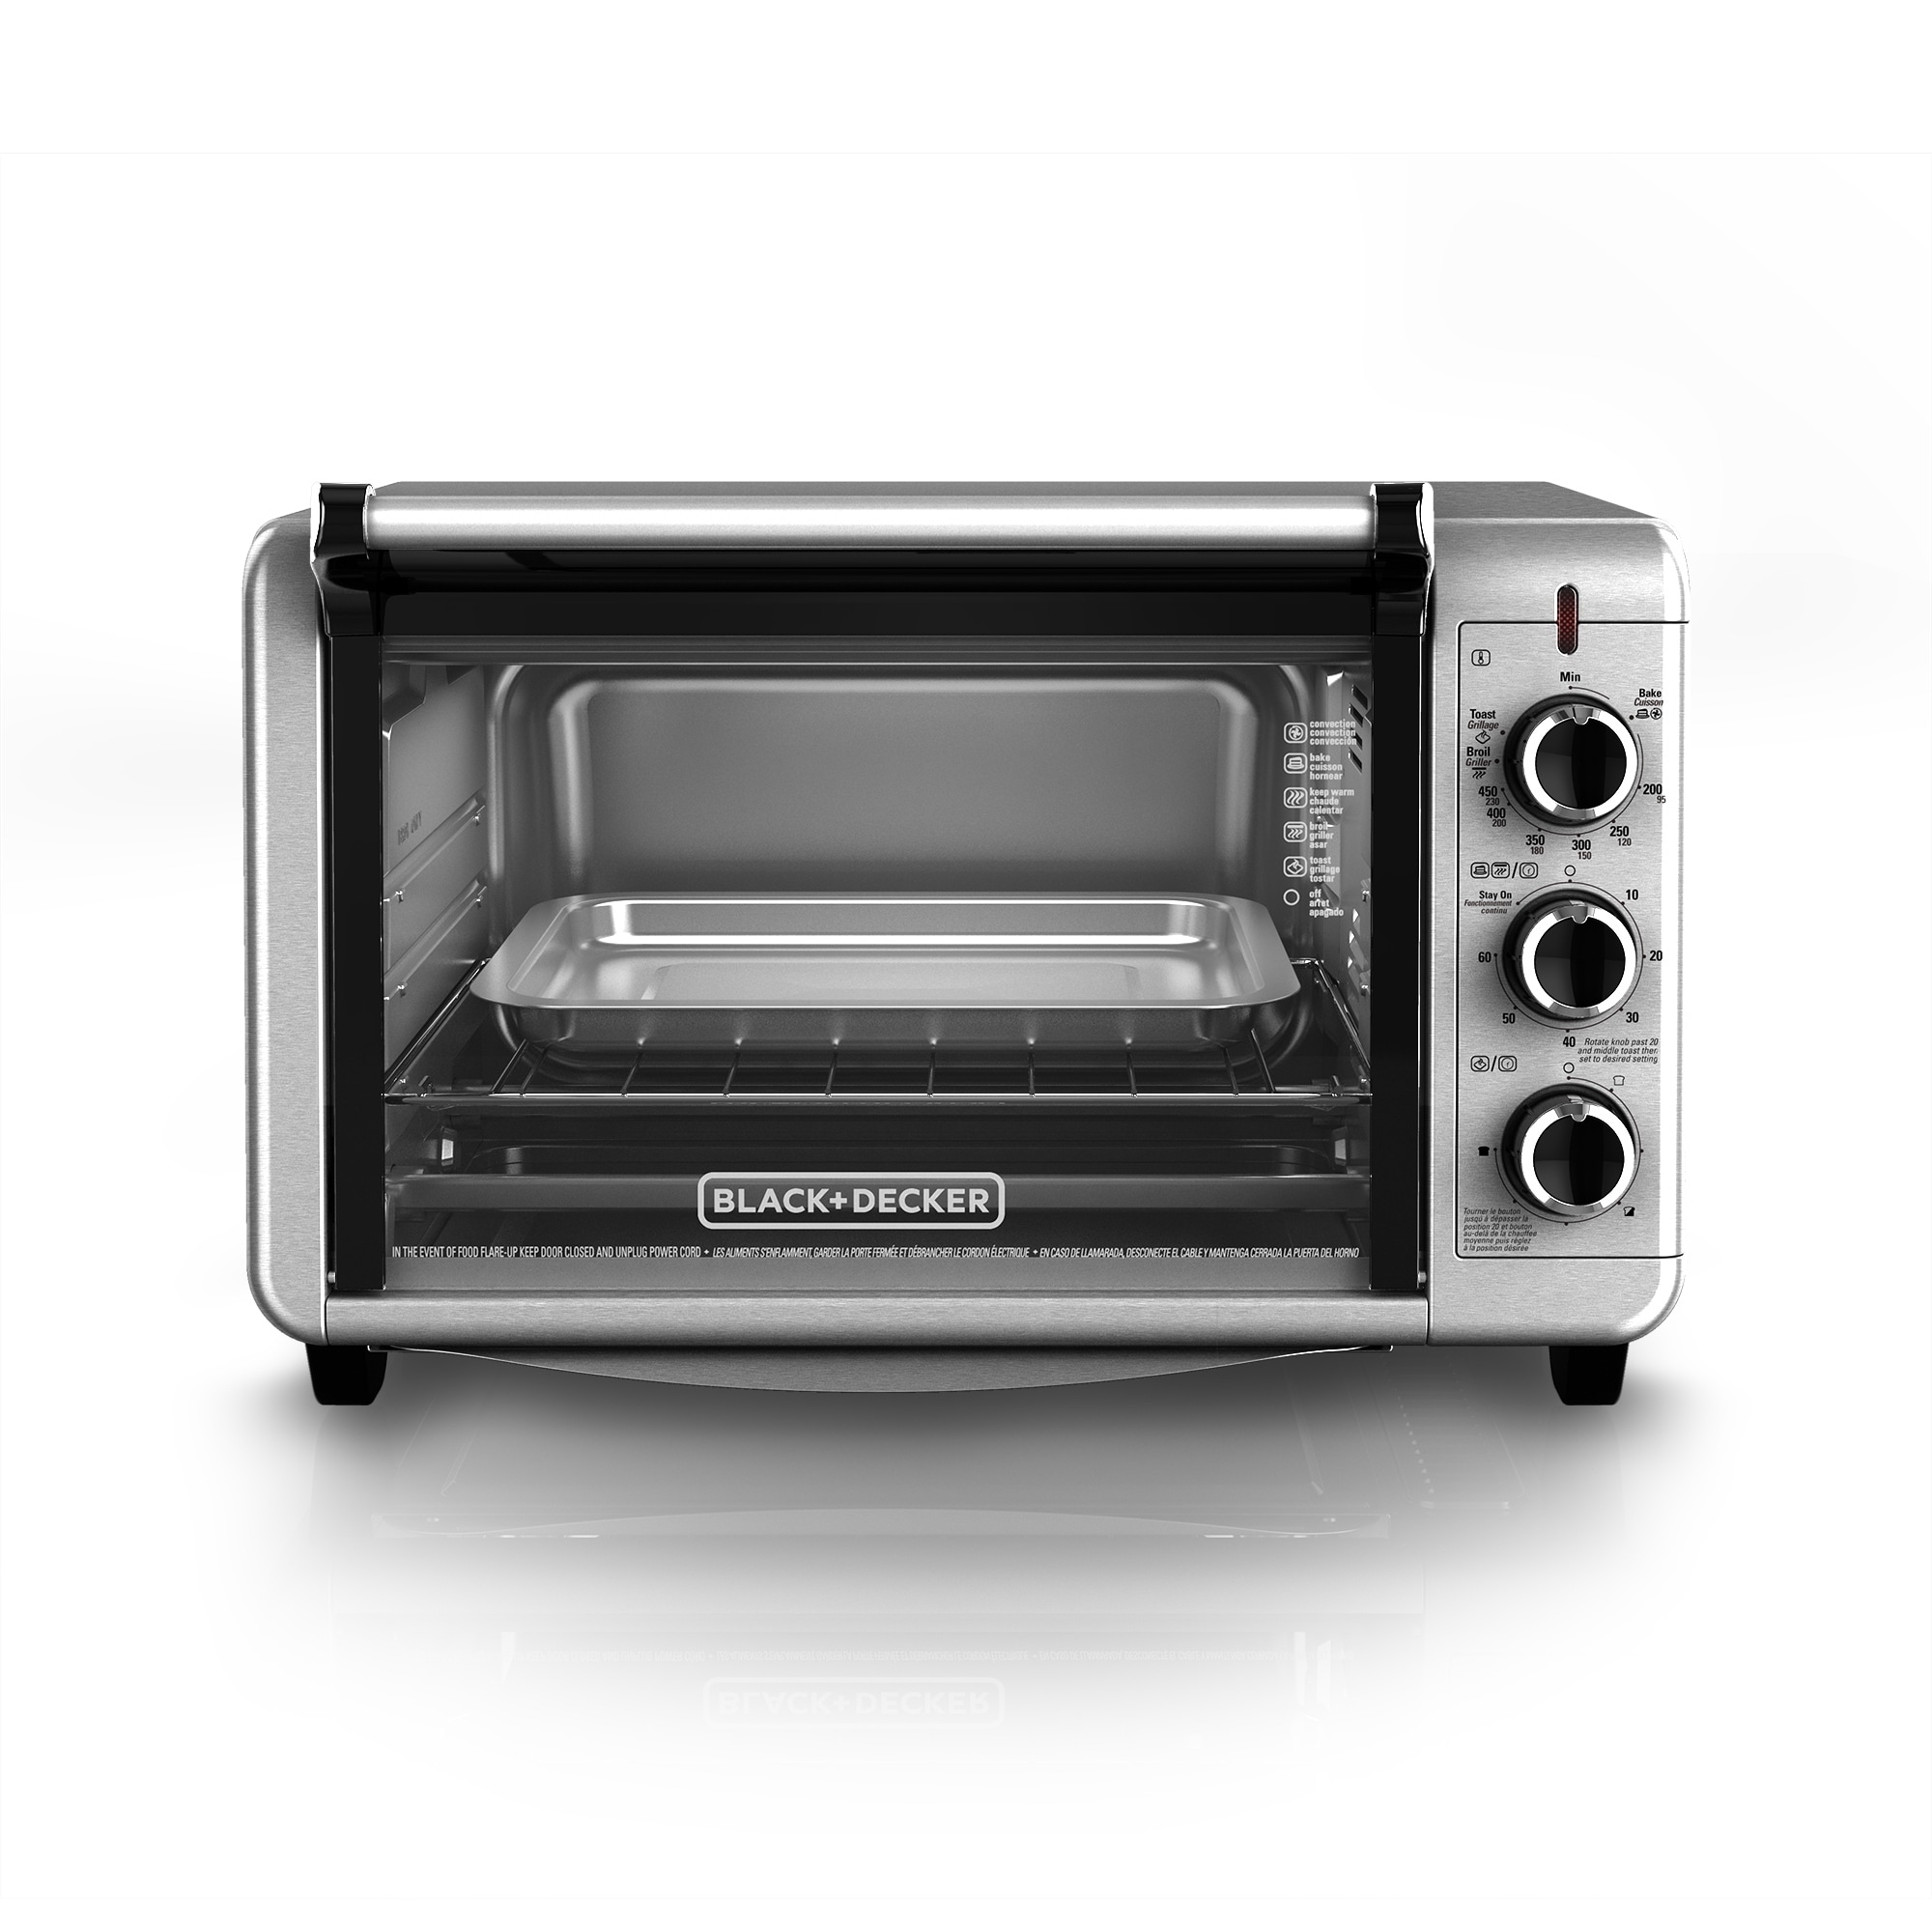 https://ak1.ostkcdn.com/images/products/30725296/Black-Decker-TO3210SSD-6-Slice-Counter-Top-Toaster-Oven-Silver-6833dede-65eb-4e93-8dda-821ab7de3ee8.jpg